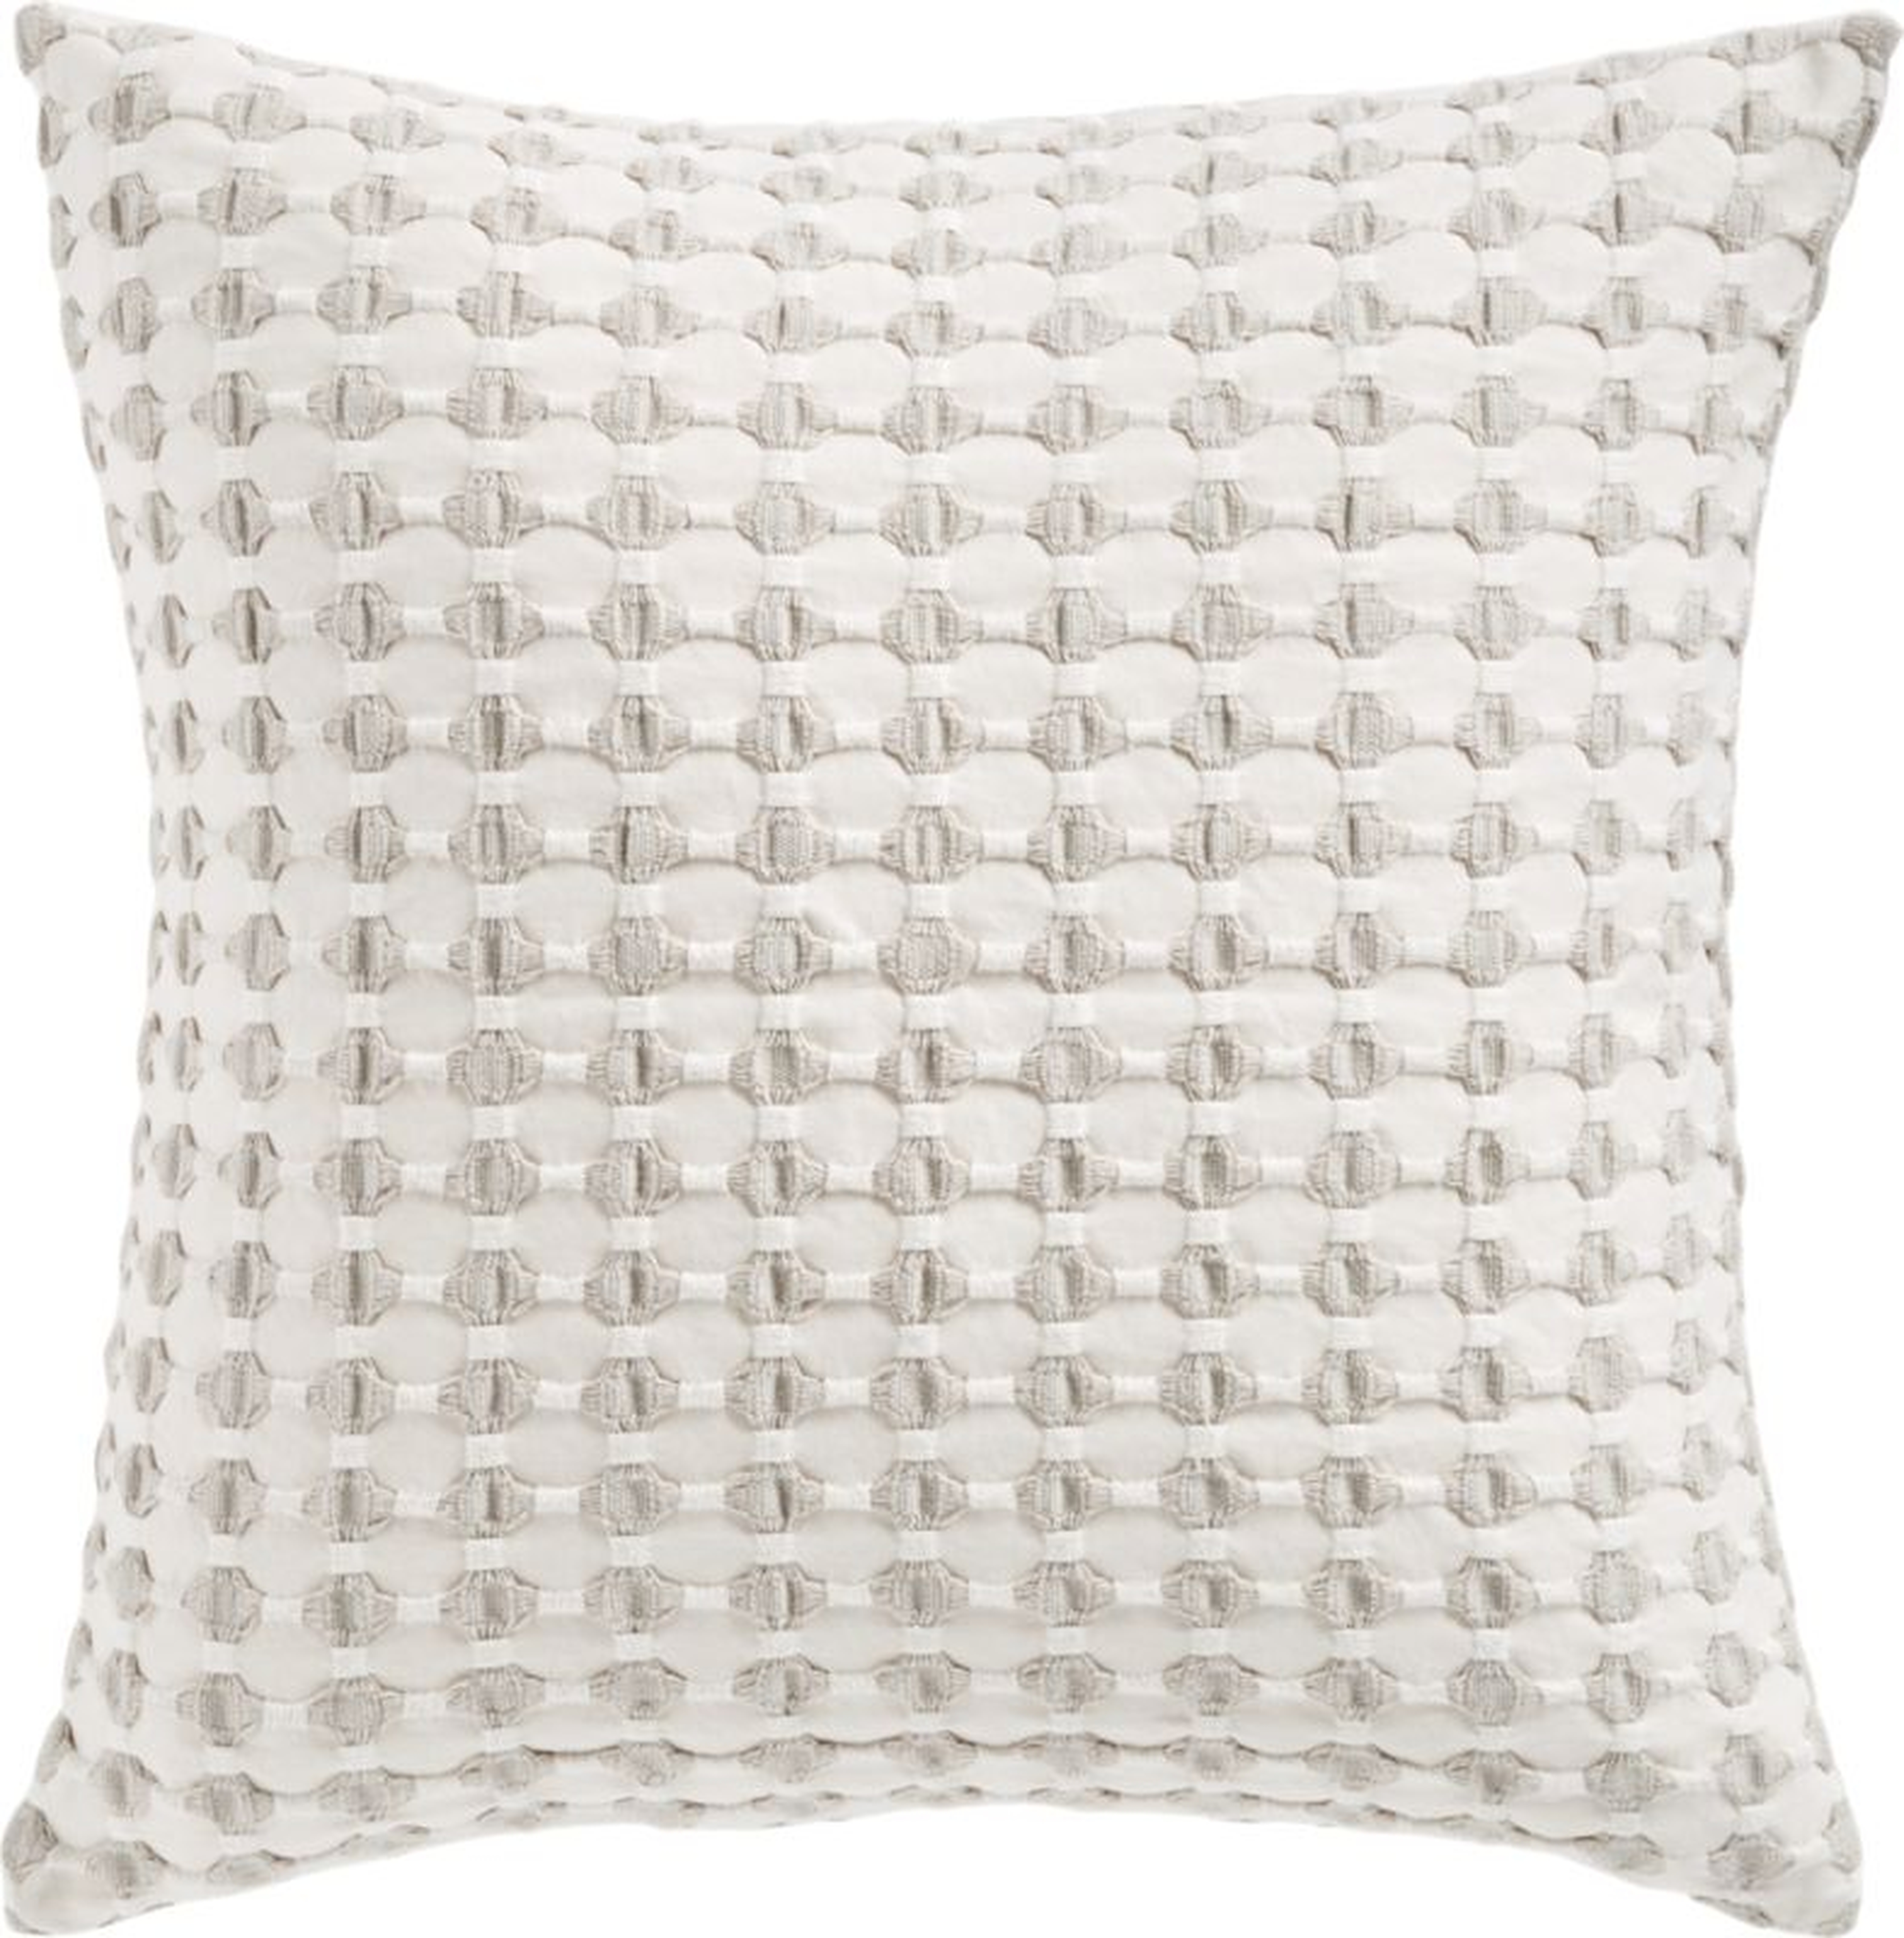 Estela Pillow, Feather-Down Insert, Gray & White, 20" x 20" - CB2